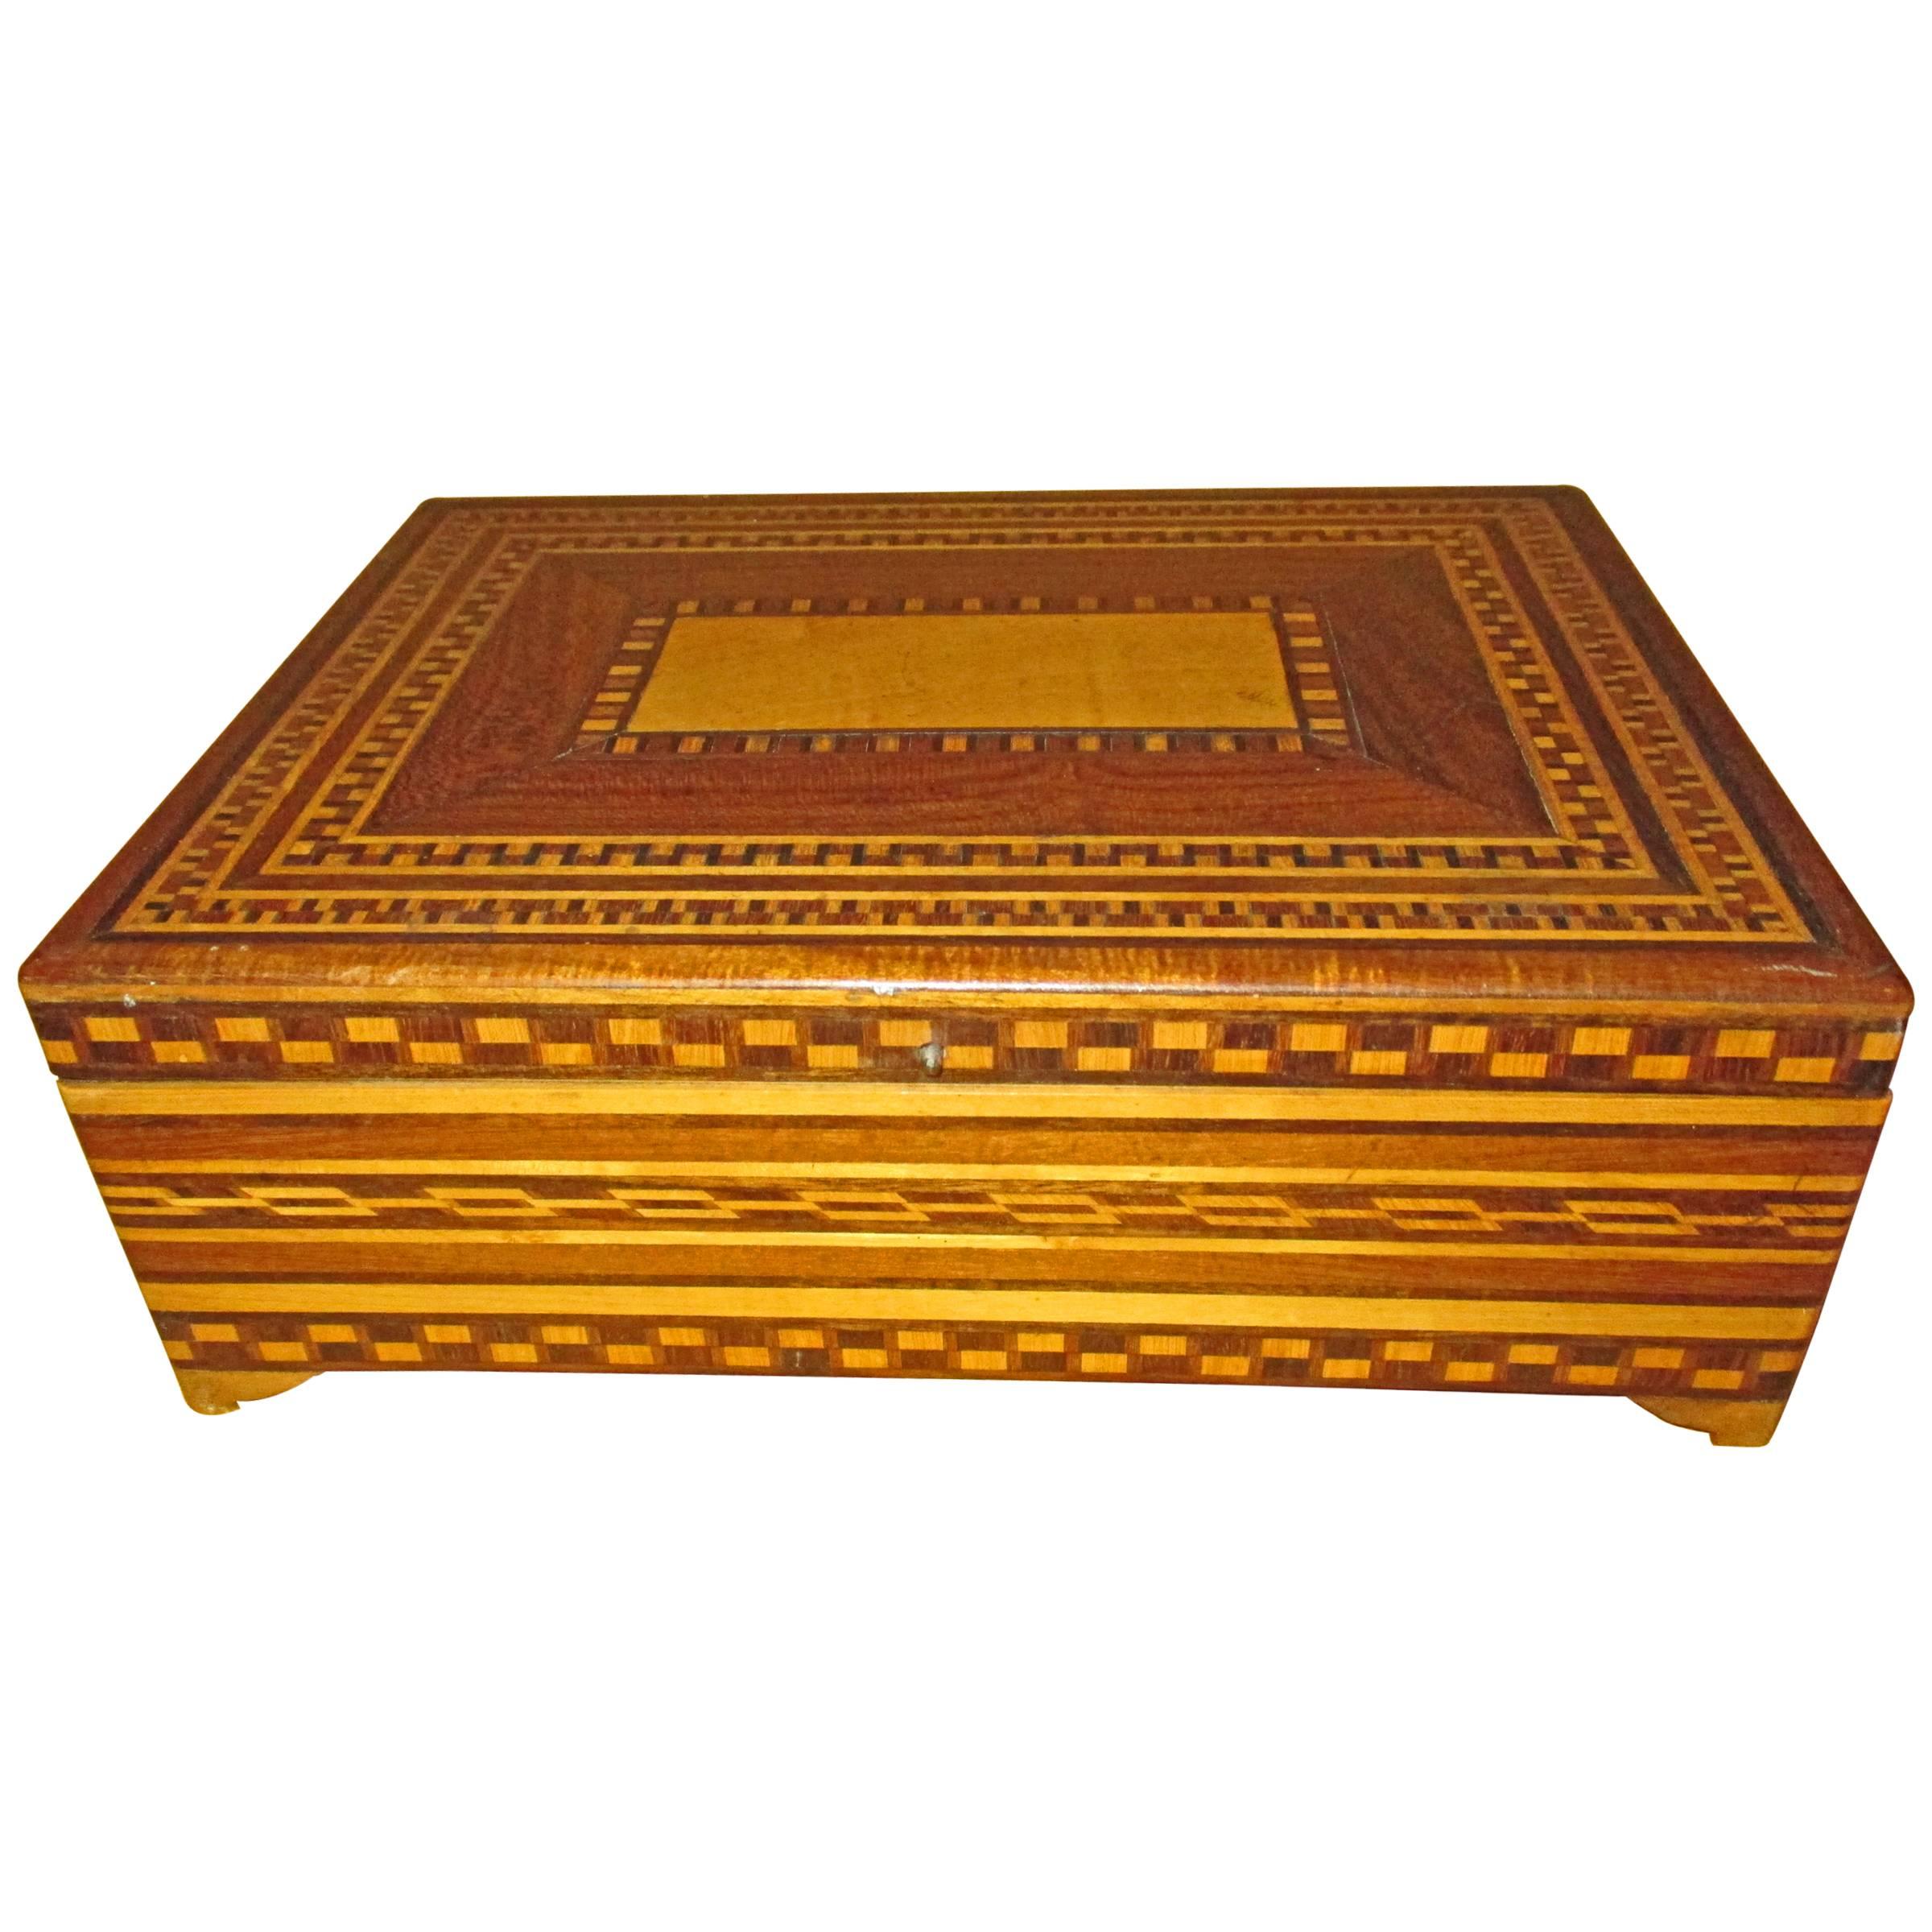 Santa Maria Del Rio Rebozo Case, Inlaid Wooden Box for Storing Rebozos